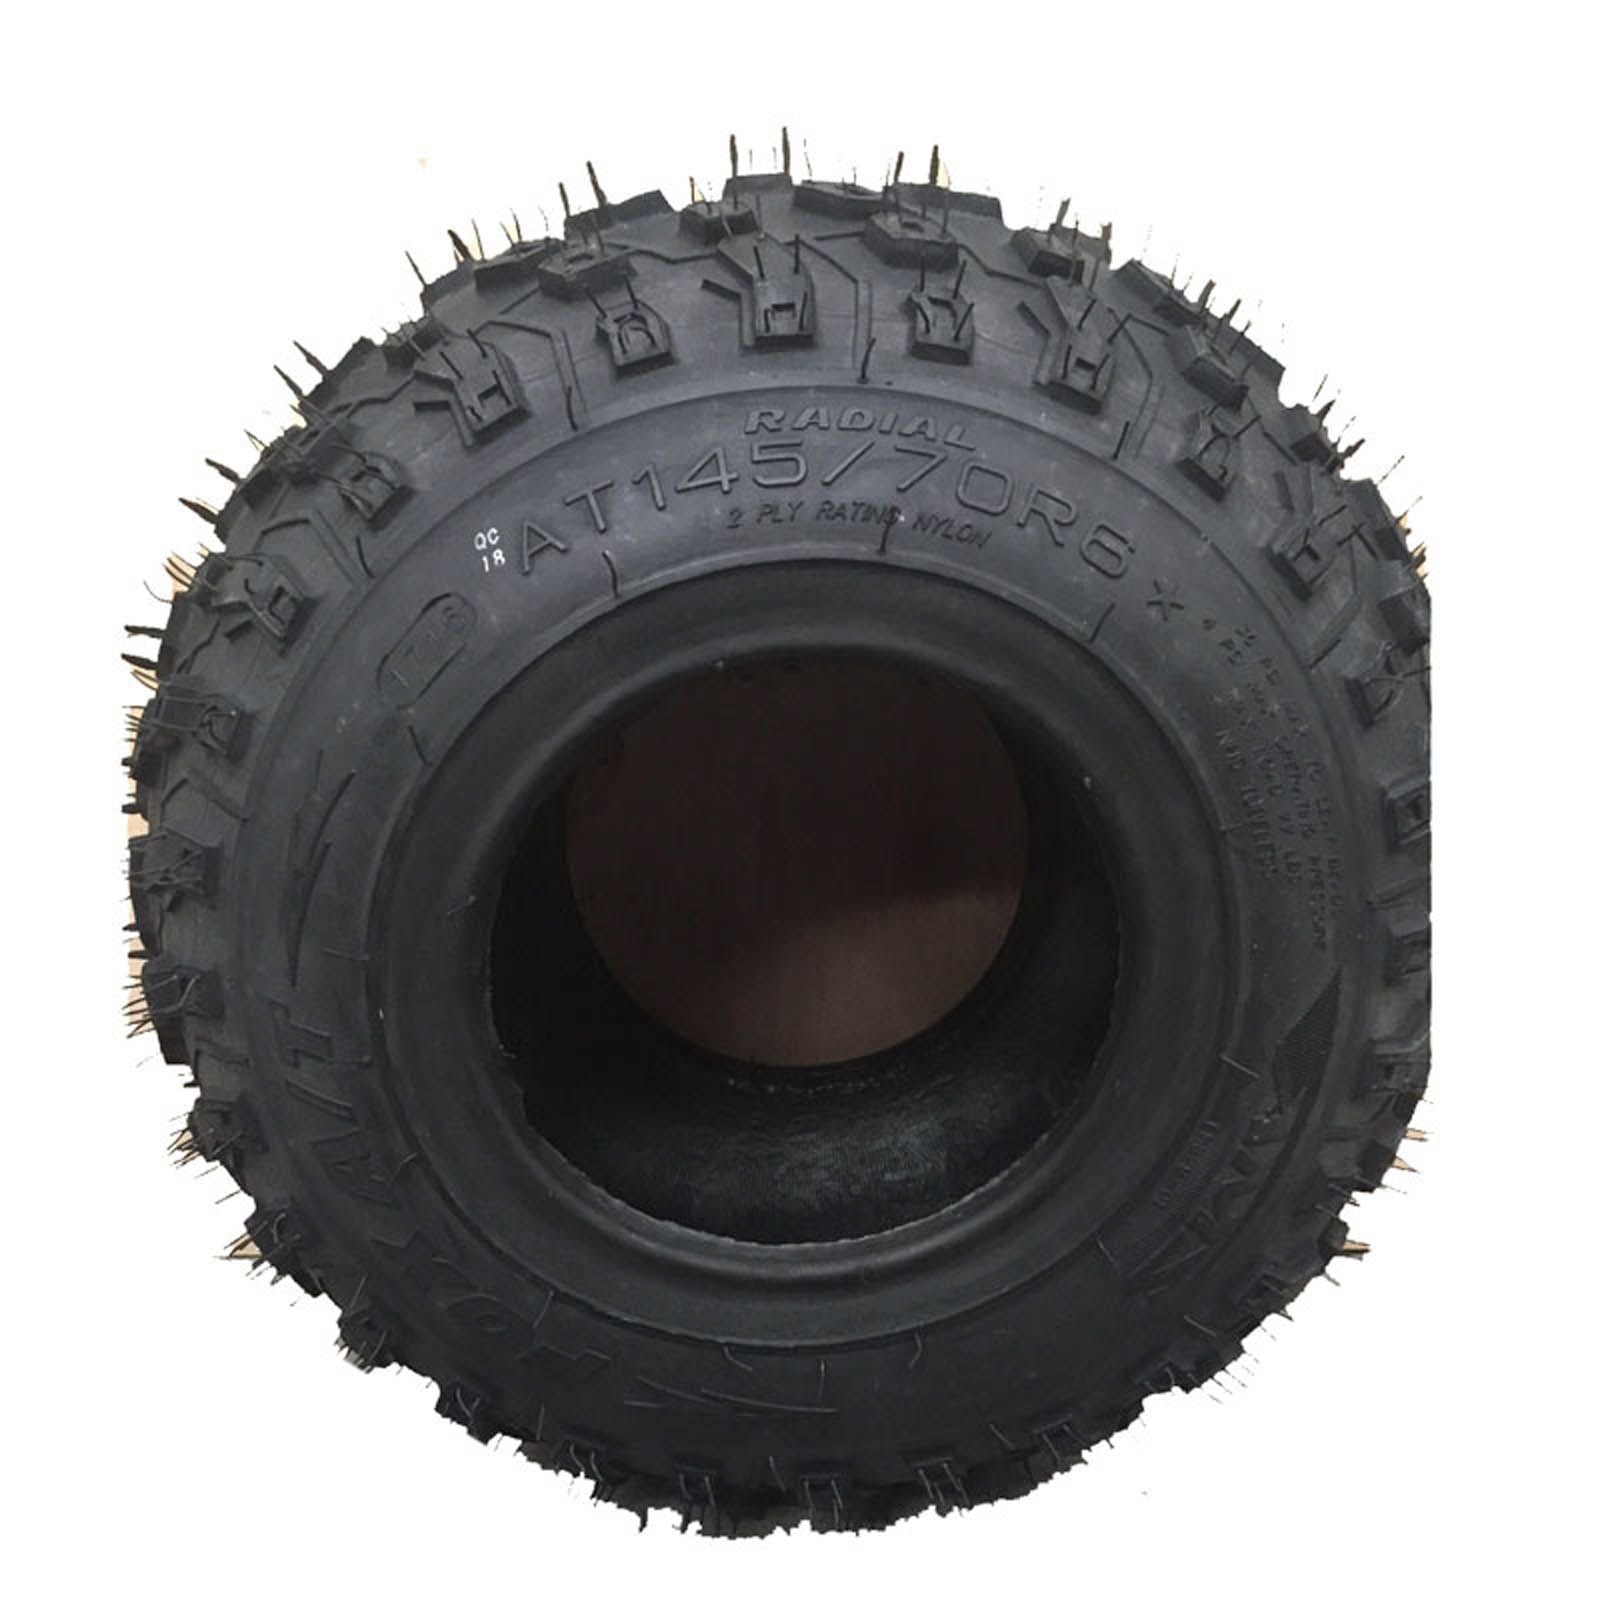 New AMS Fox ATV Tyres M829 145x7.0Rx6 2PR Radial TL 2PR TL #6X145X70M829